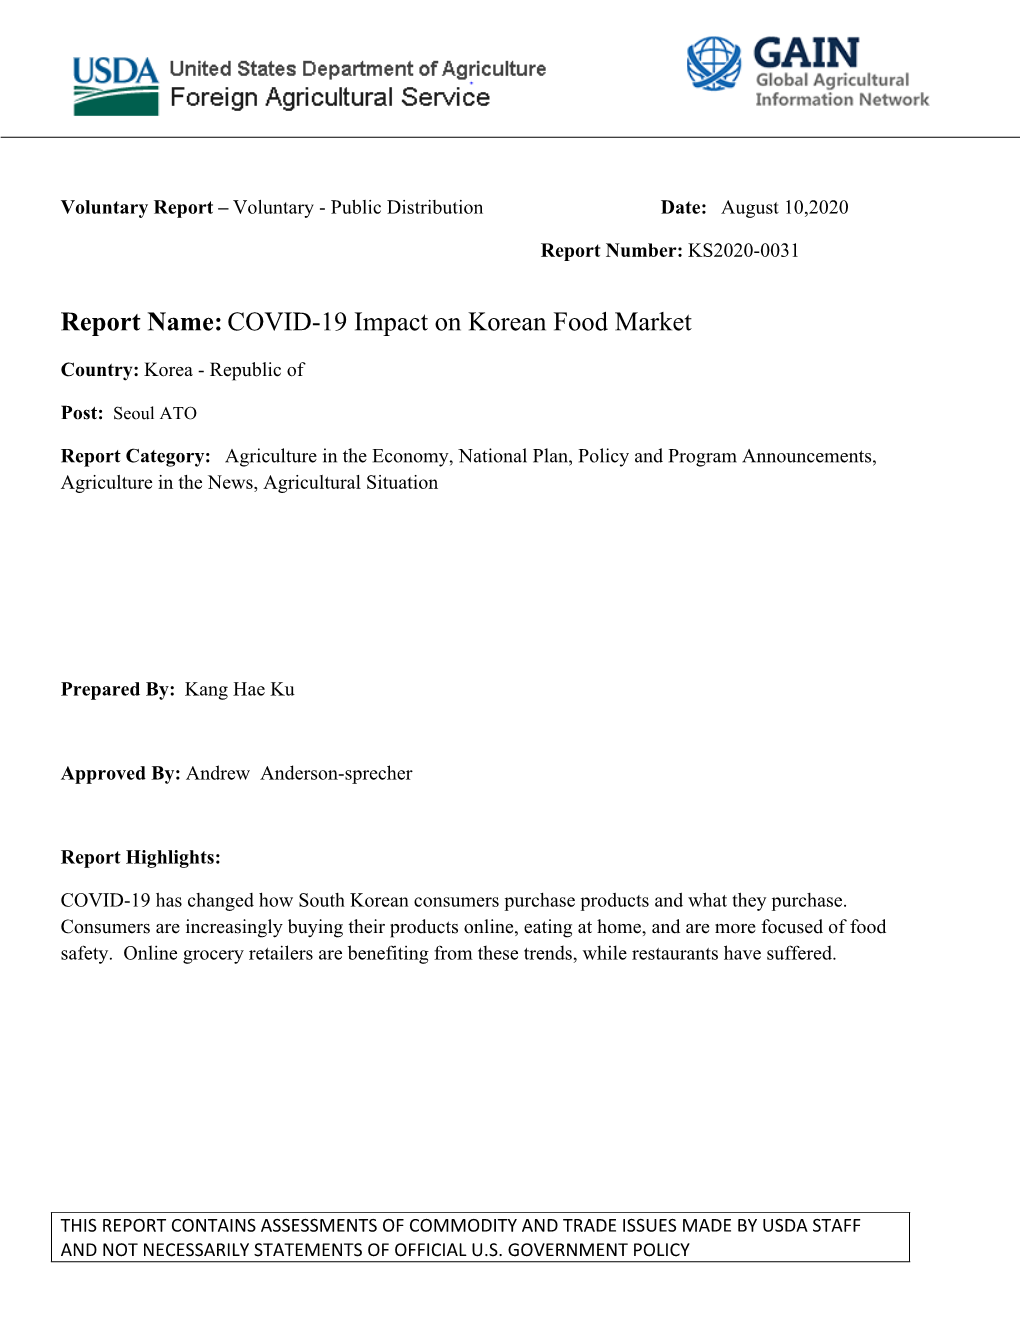 Report Name:COVID-19 Impact on Korean Food Market